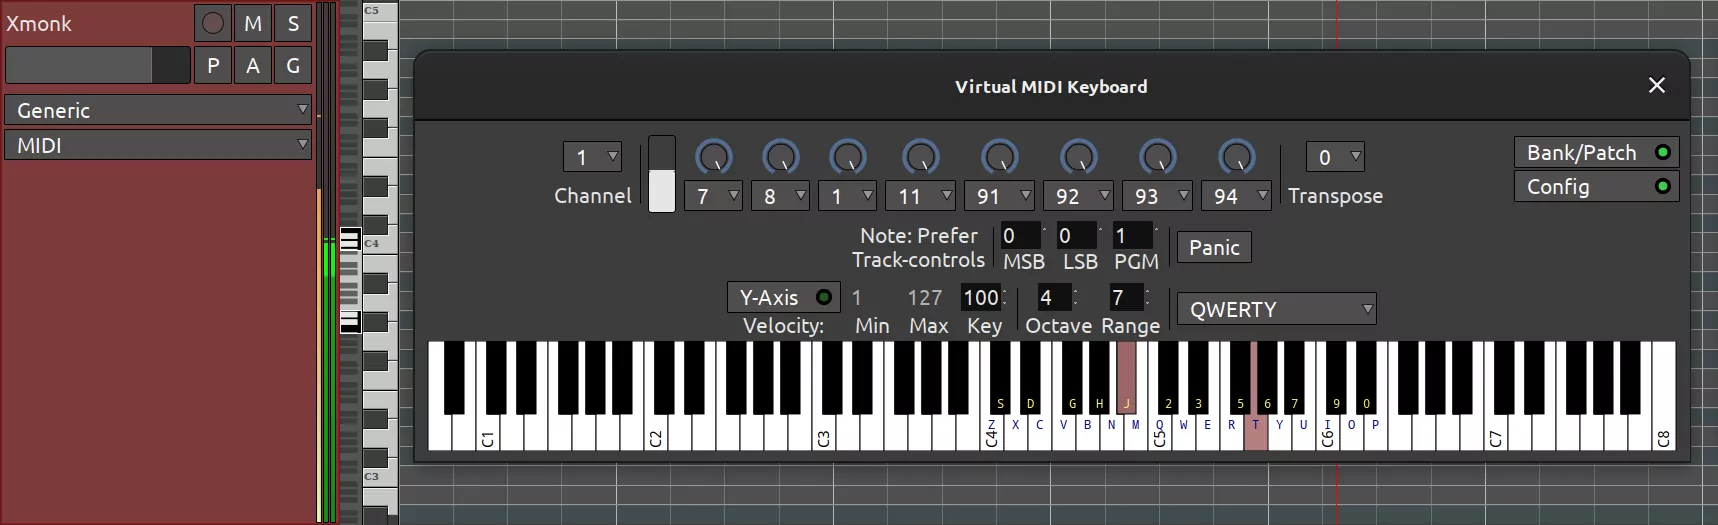 MIDI keyboard in Ardour